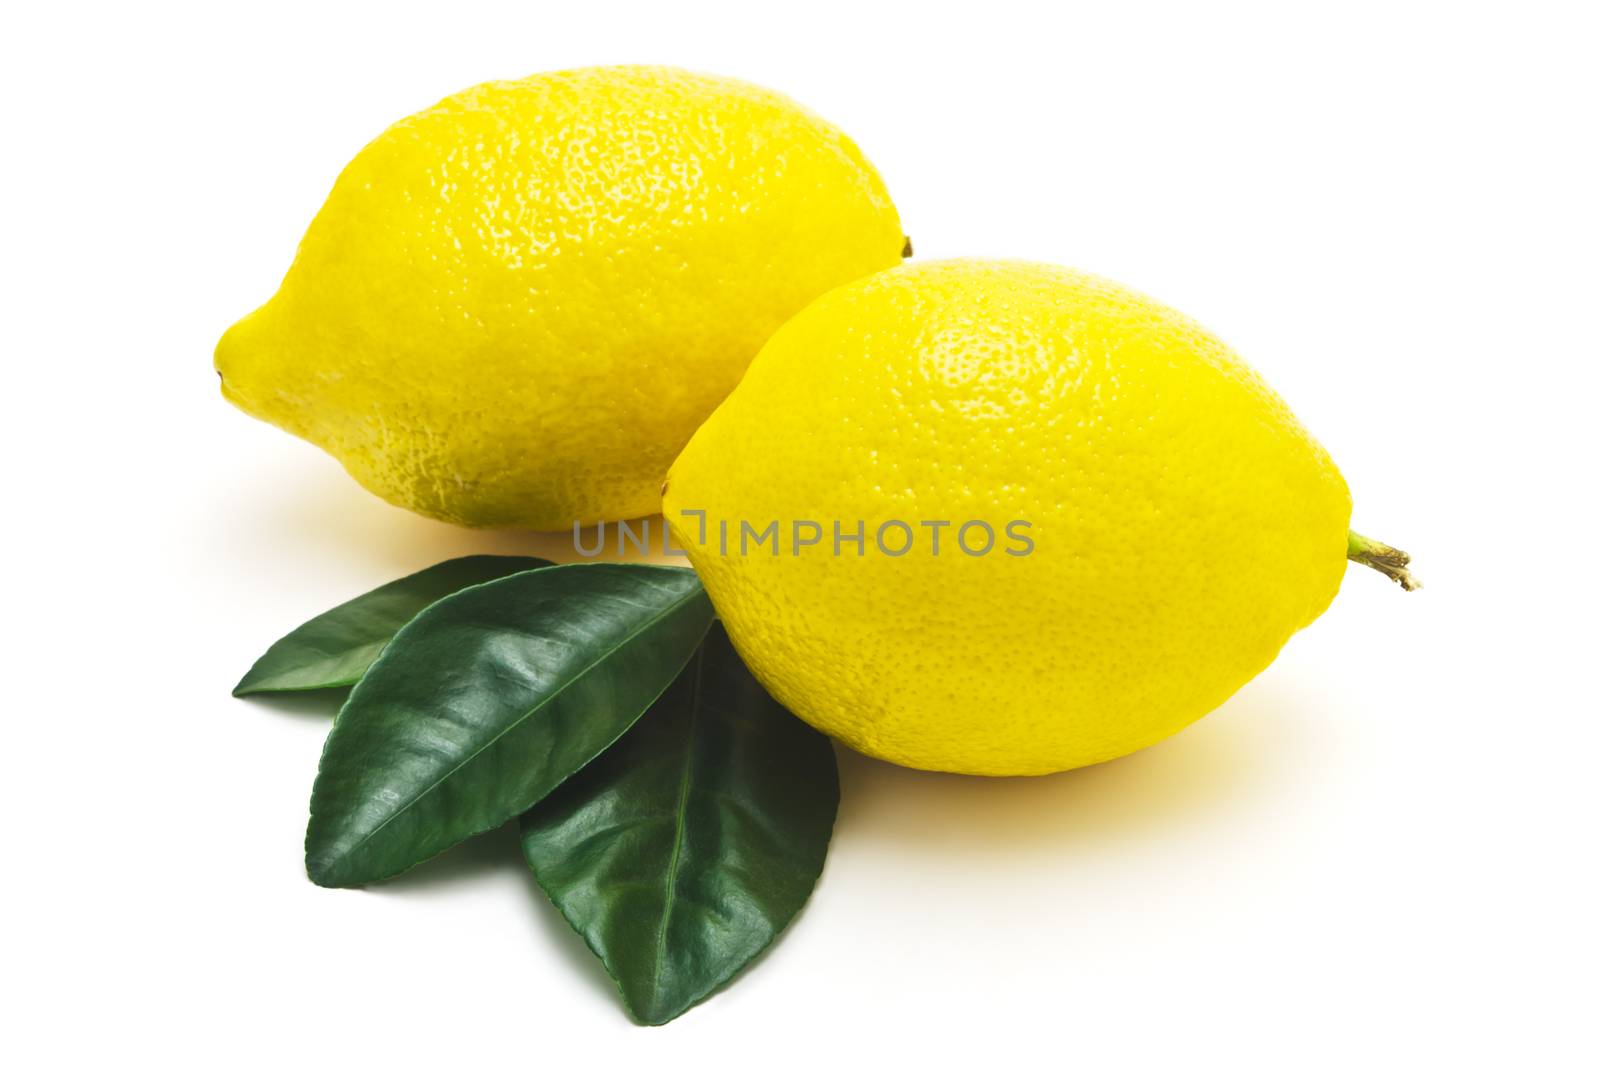 Juicy lemons on a white background by pilotL39